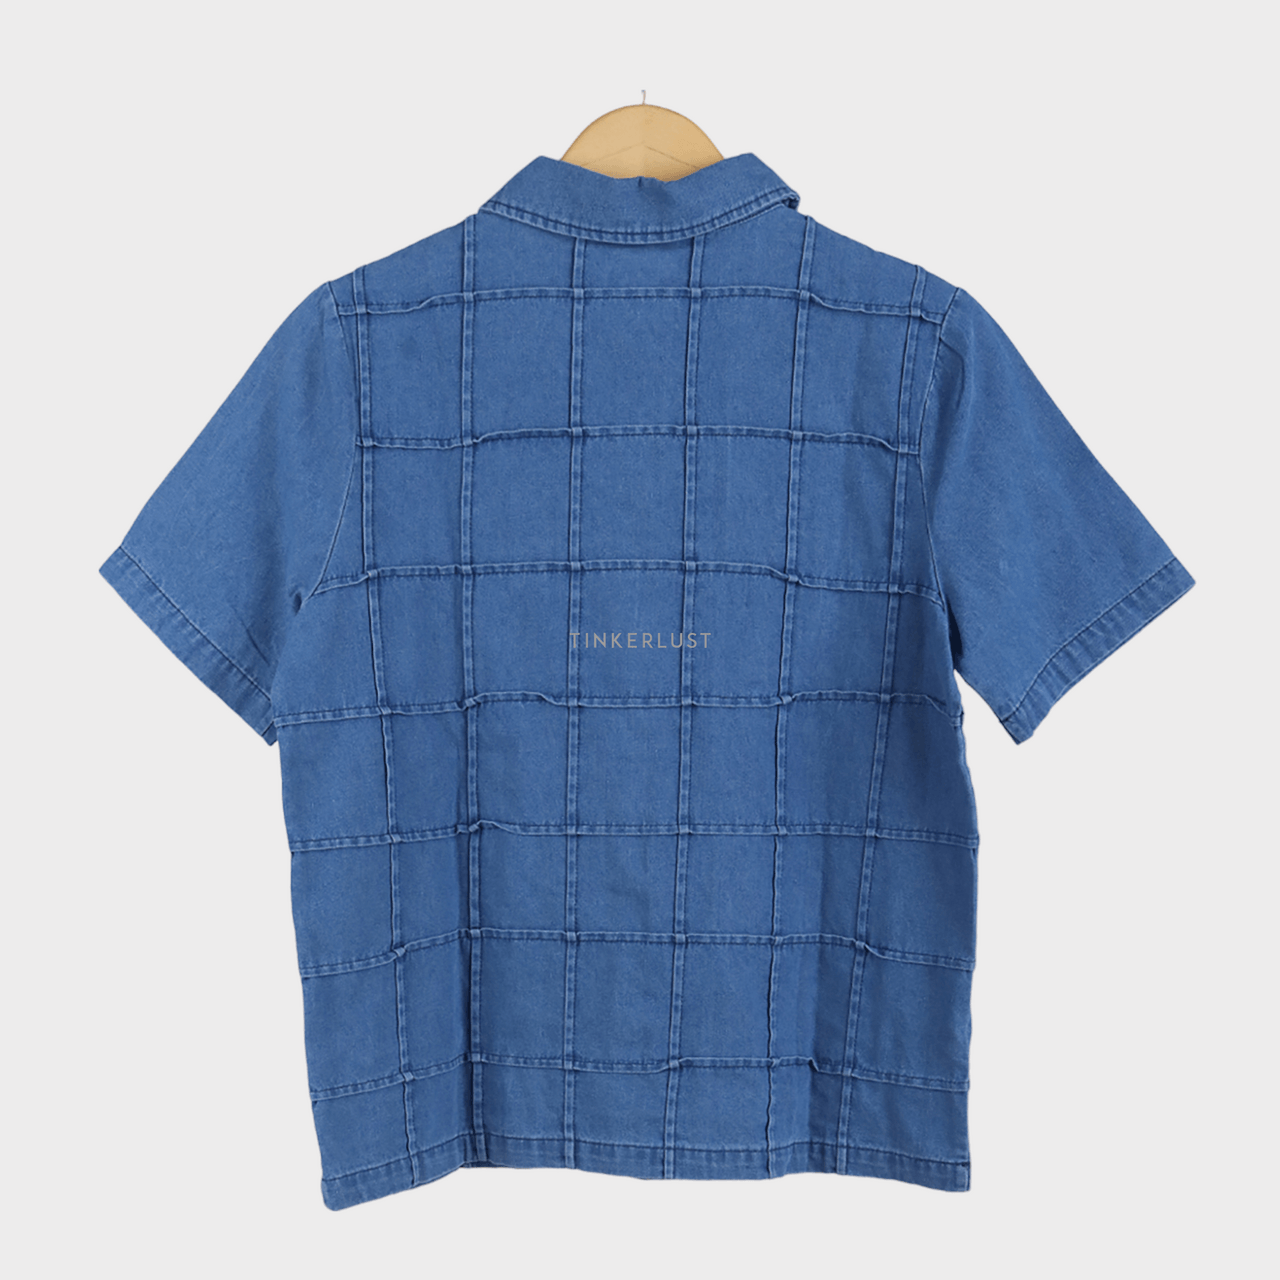 Mix & Max Blue Denim Shirt